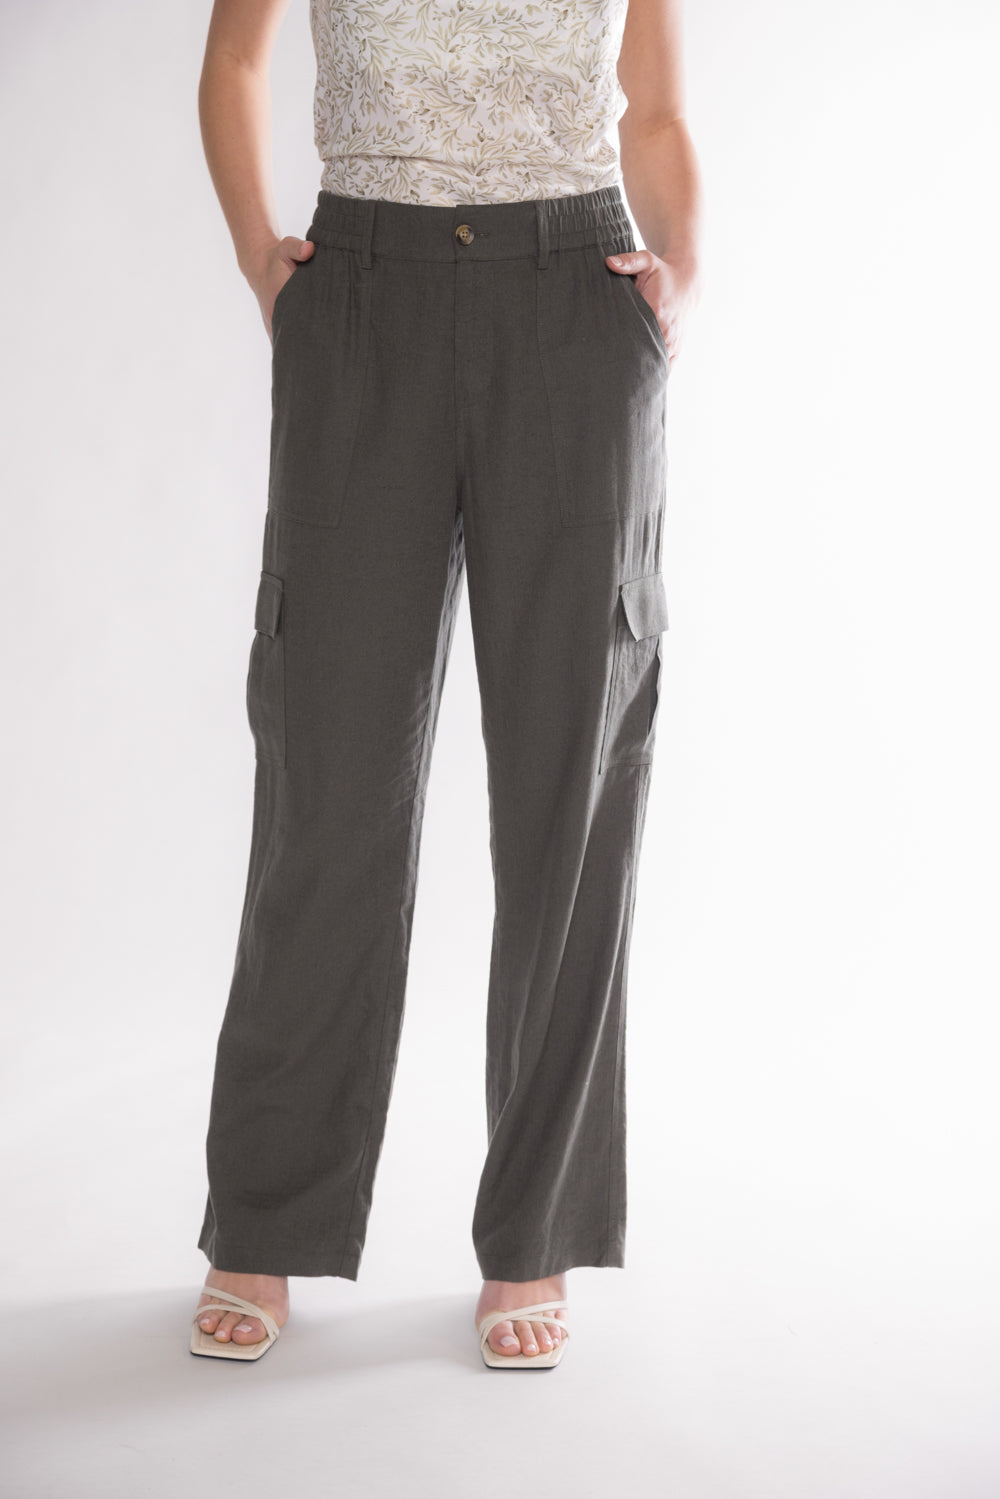 Matty M Charcoal XS Pants  Fall leggings, Pants, Clothes design